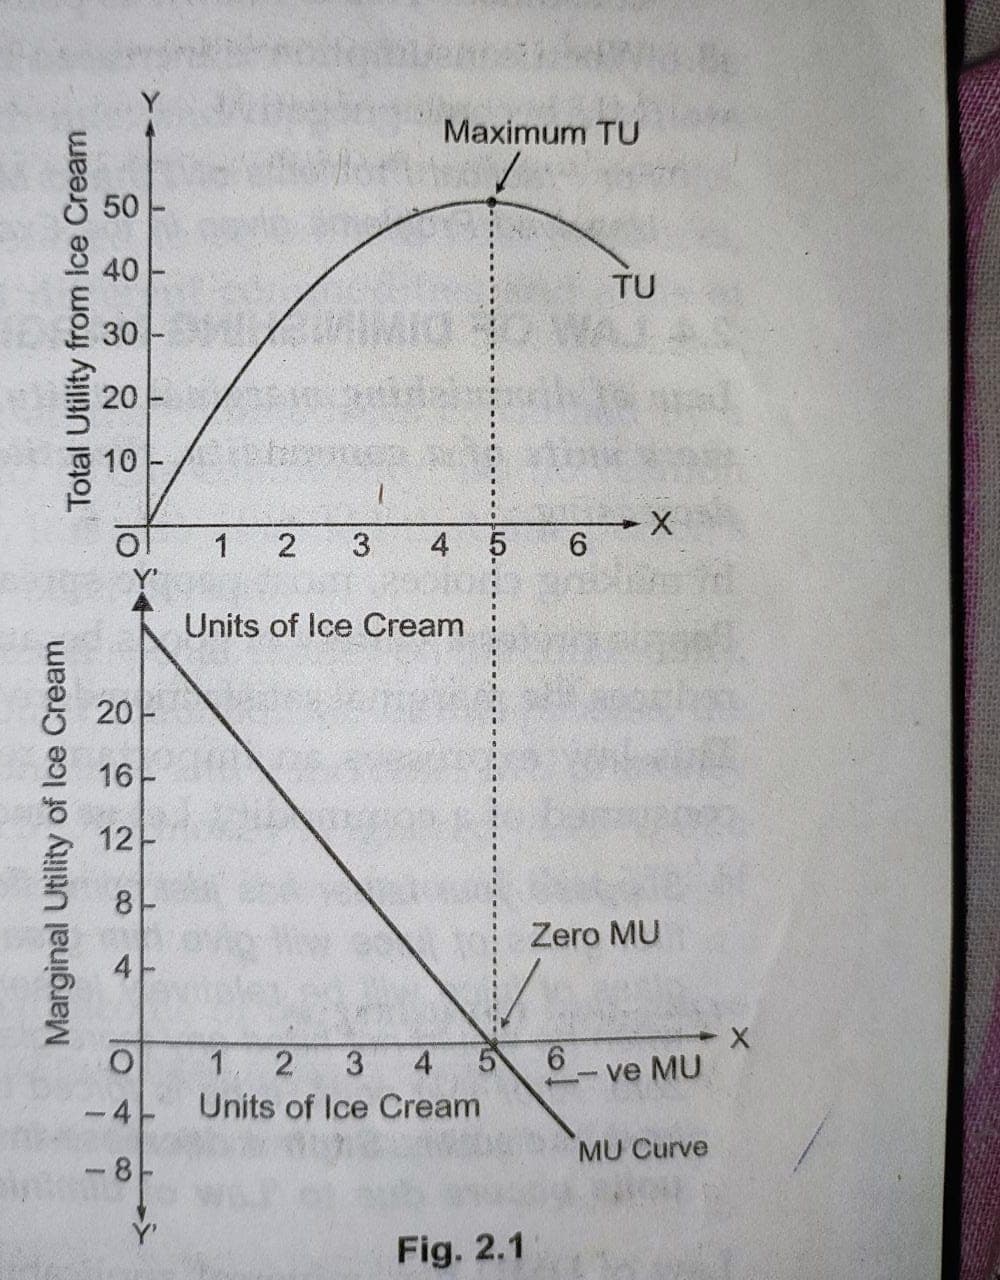 Total Utility from Ice Cream
50
Marginal Utility of Ice Cream
40
30
20
10
ol
stre Y
20-
16-
12-
8-
4
O
-4-
-8-
1 2 3
Maximum TU
4
Units of Ice Cream
1. 2 3 4
Units of Ice Cream
5
5
Fig. 2.1
6
6
1
TU
Zero MU
X
ve MU
MU Curve
X